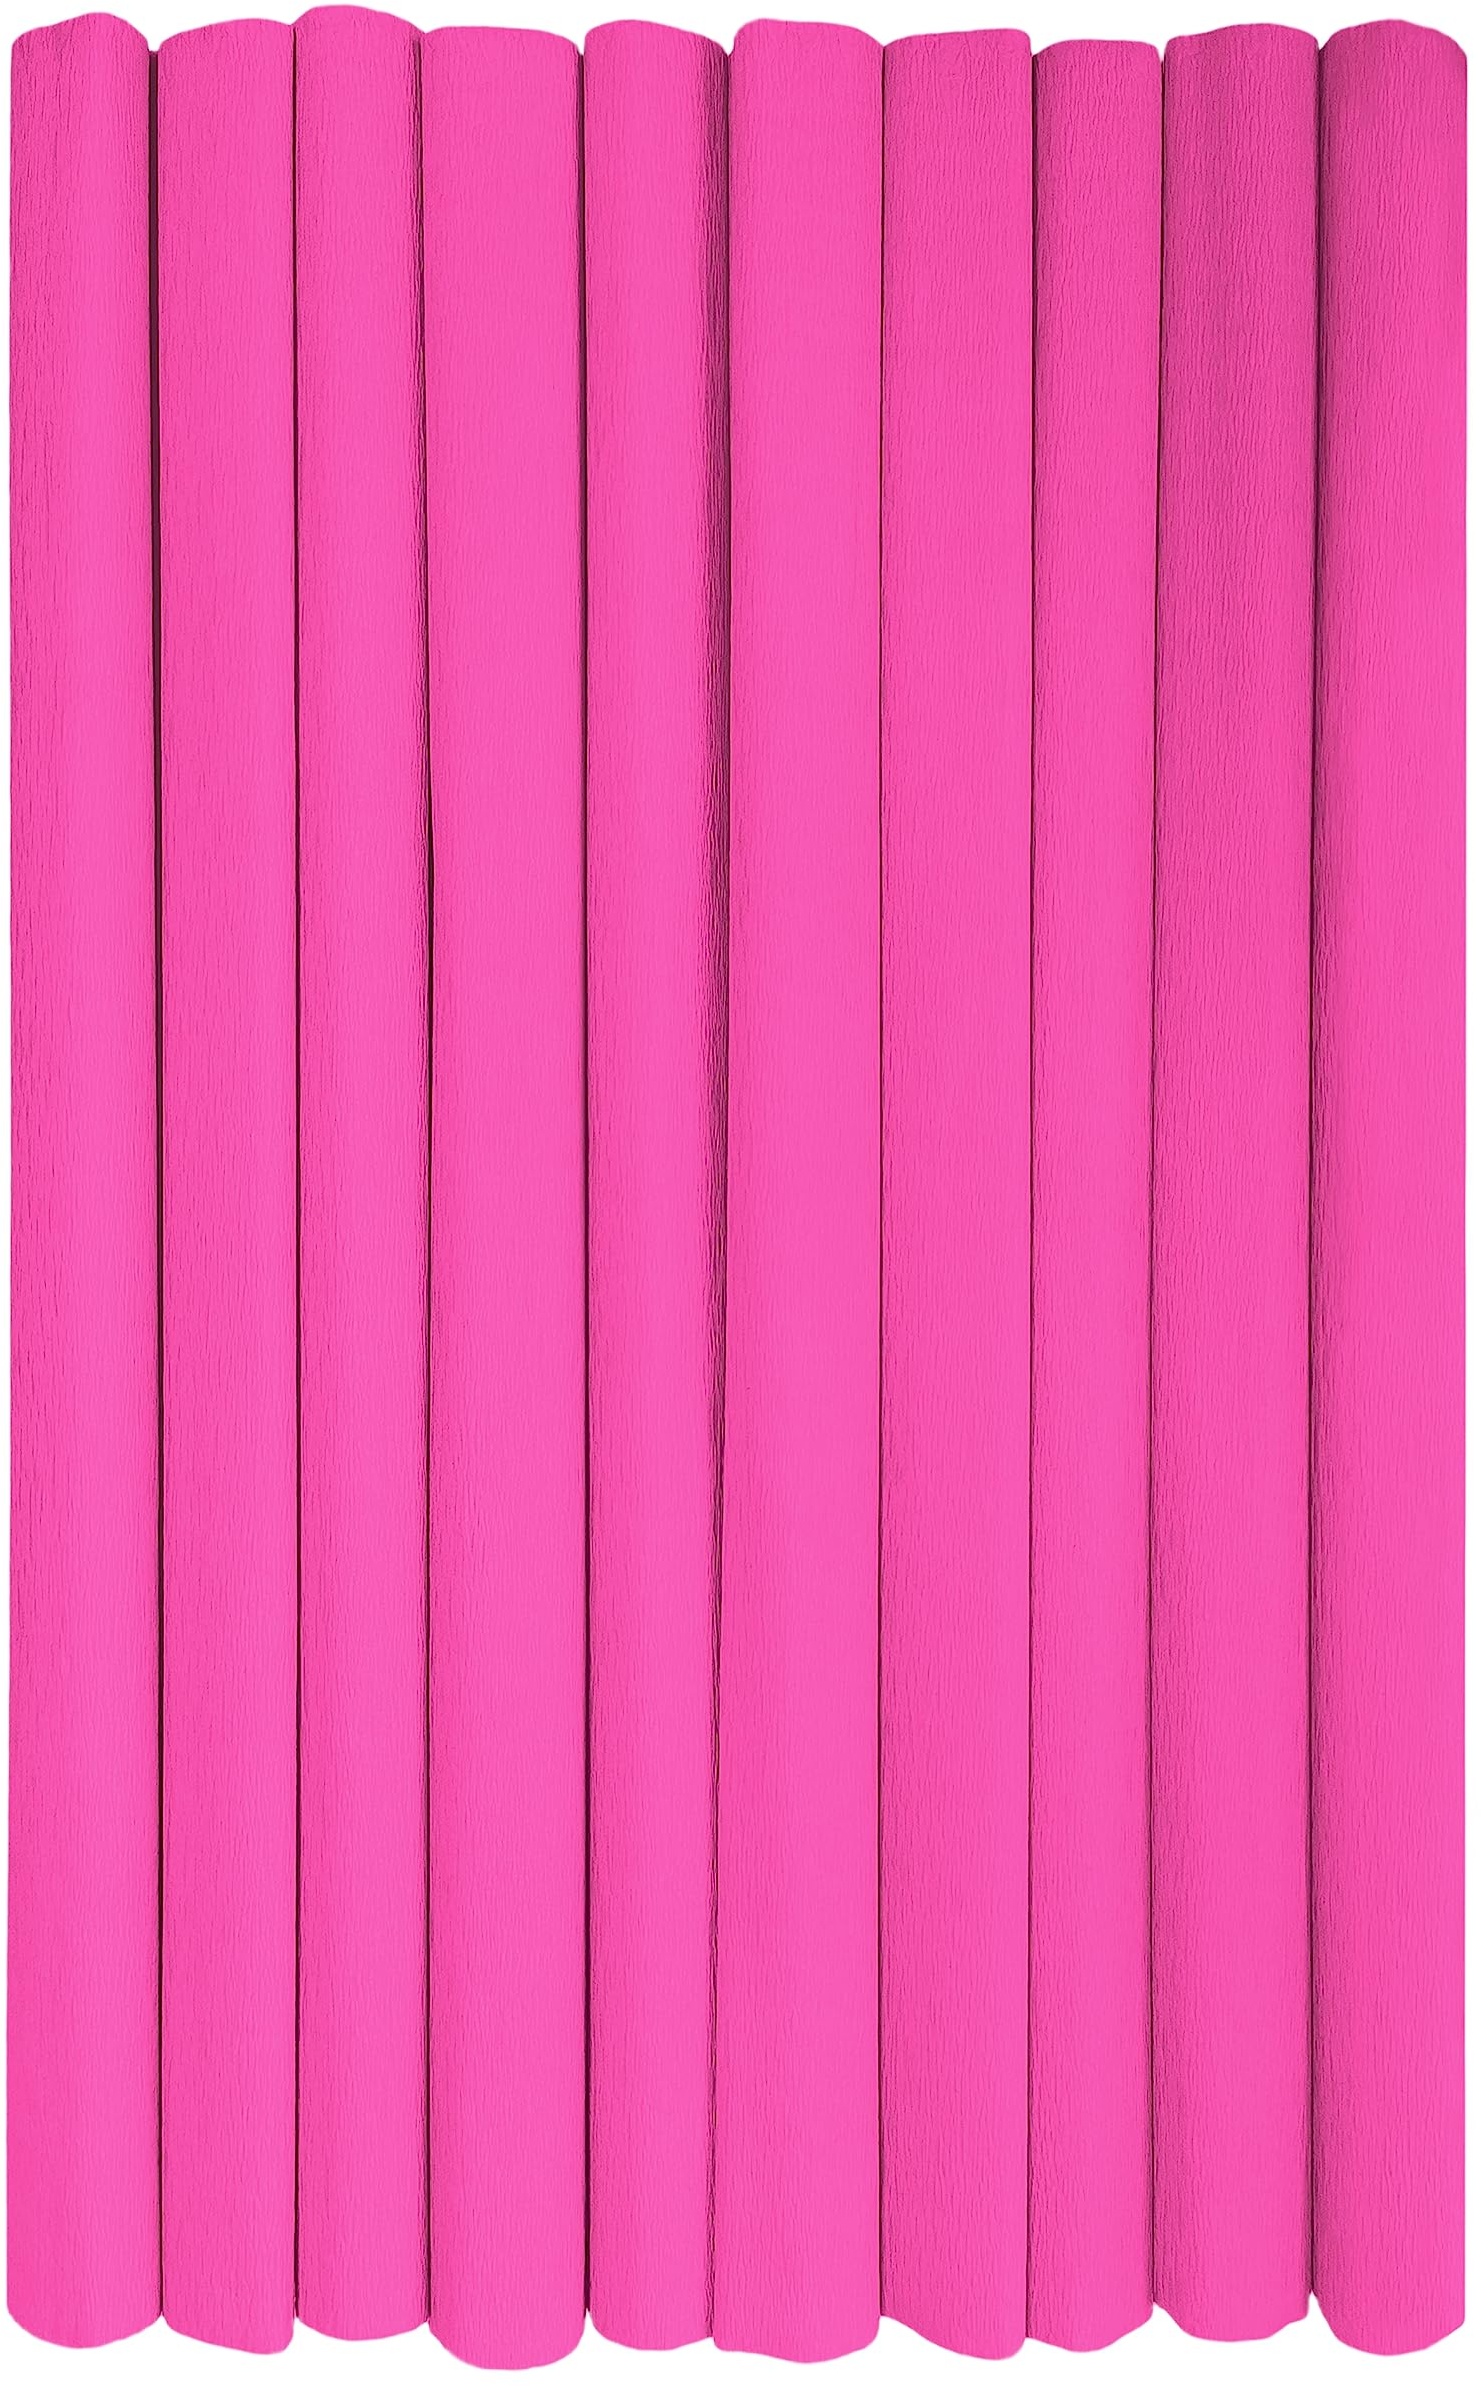 Interdruk - Crepe Paper Rolls for Kids, DIY and Decorations - Pack of 10 Reels (50cm x 200cm, 28g/m2) - 11 Light Pink